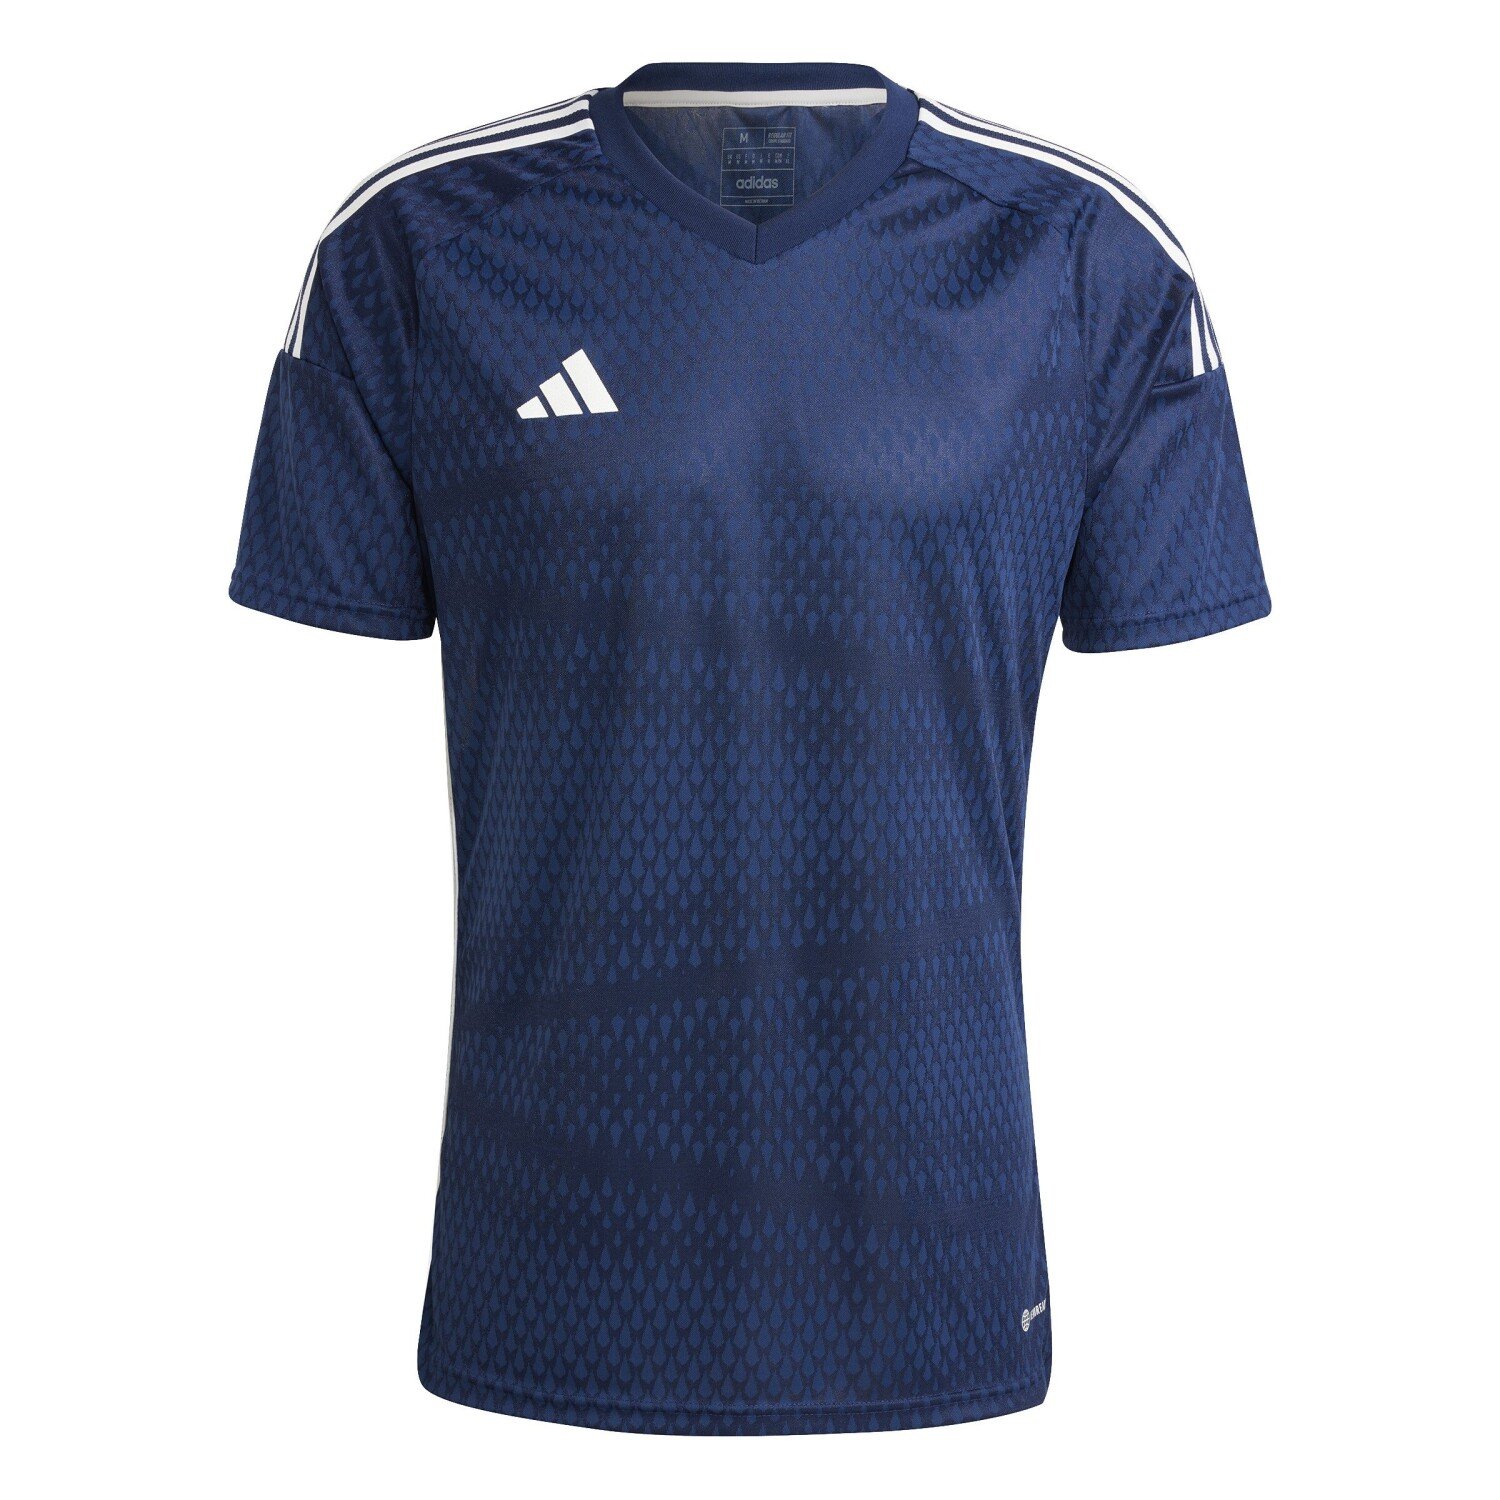 Adidas Team Sleeve 23 - Team Navy Blue 2 / White - Total Football Direct